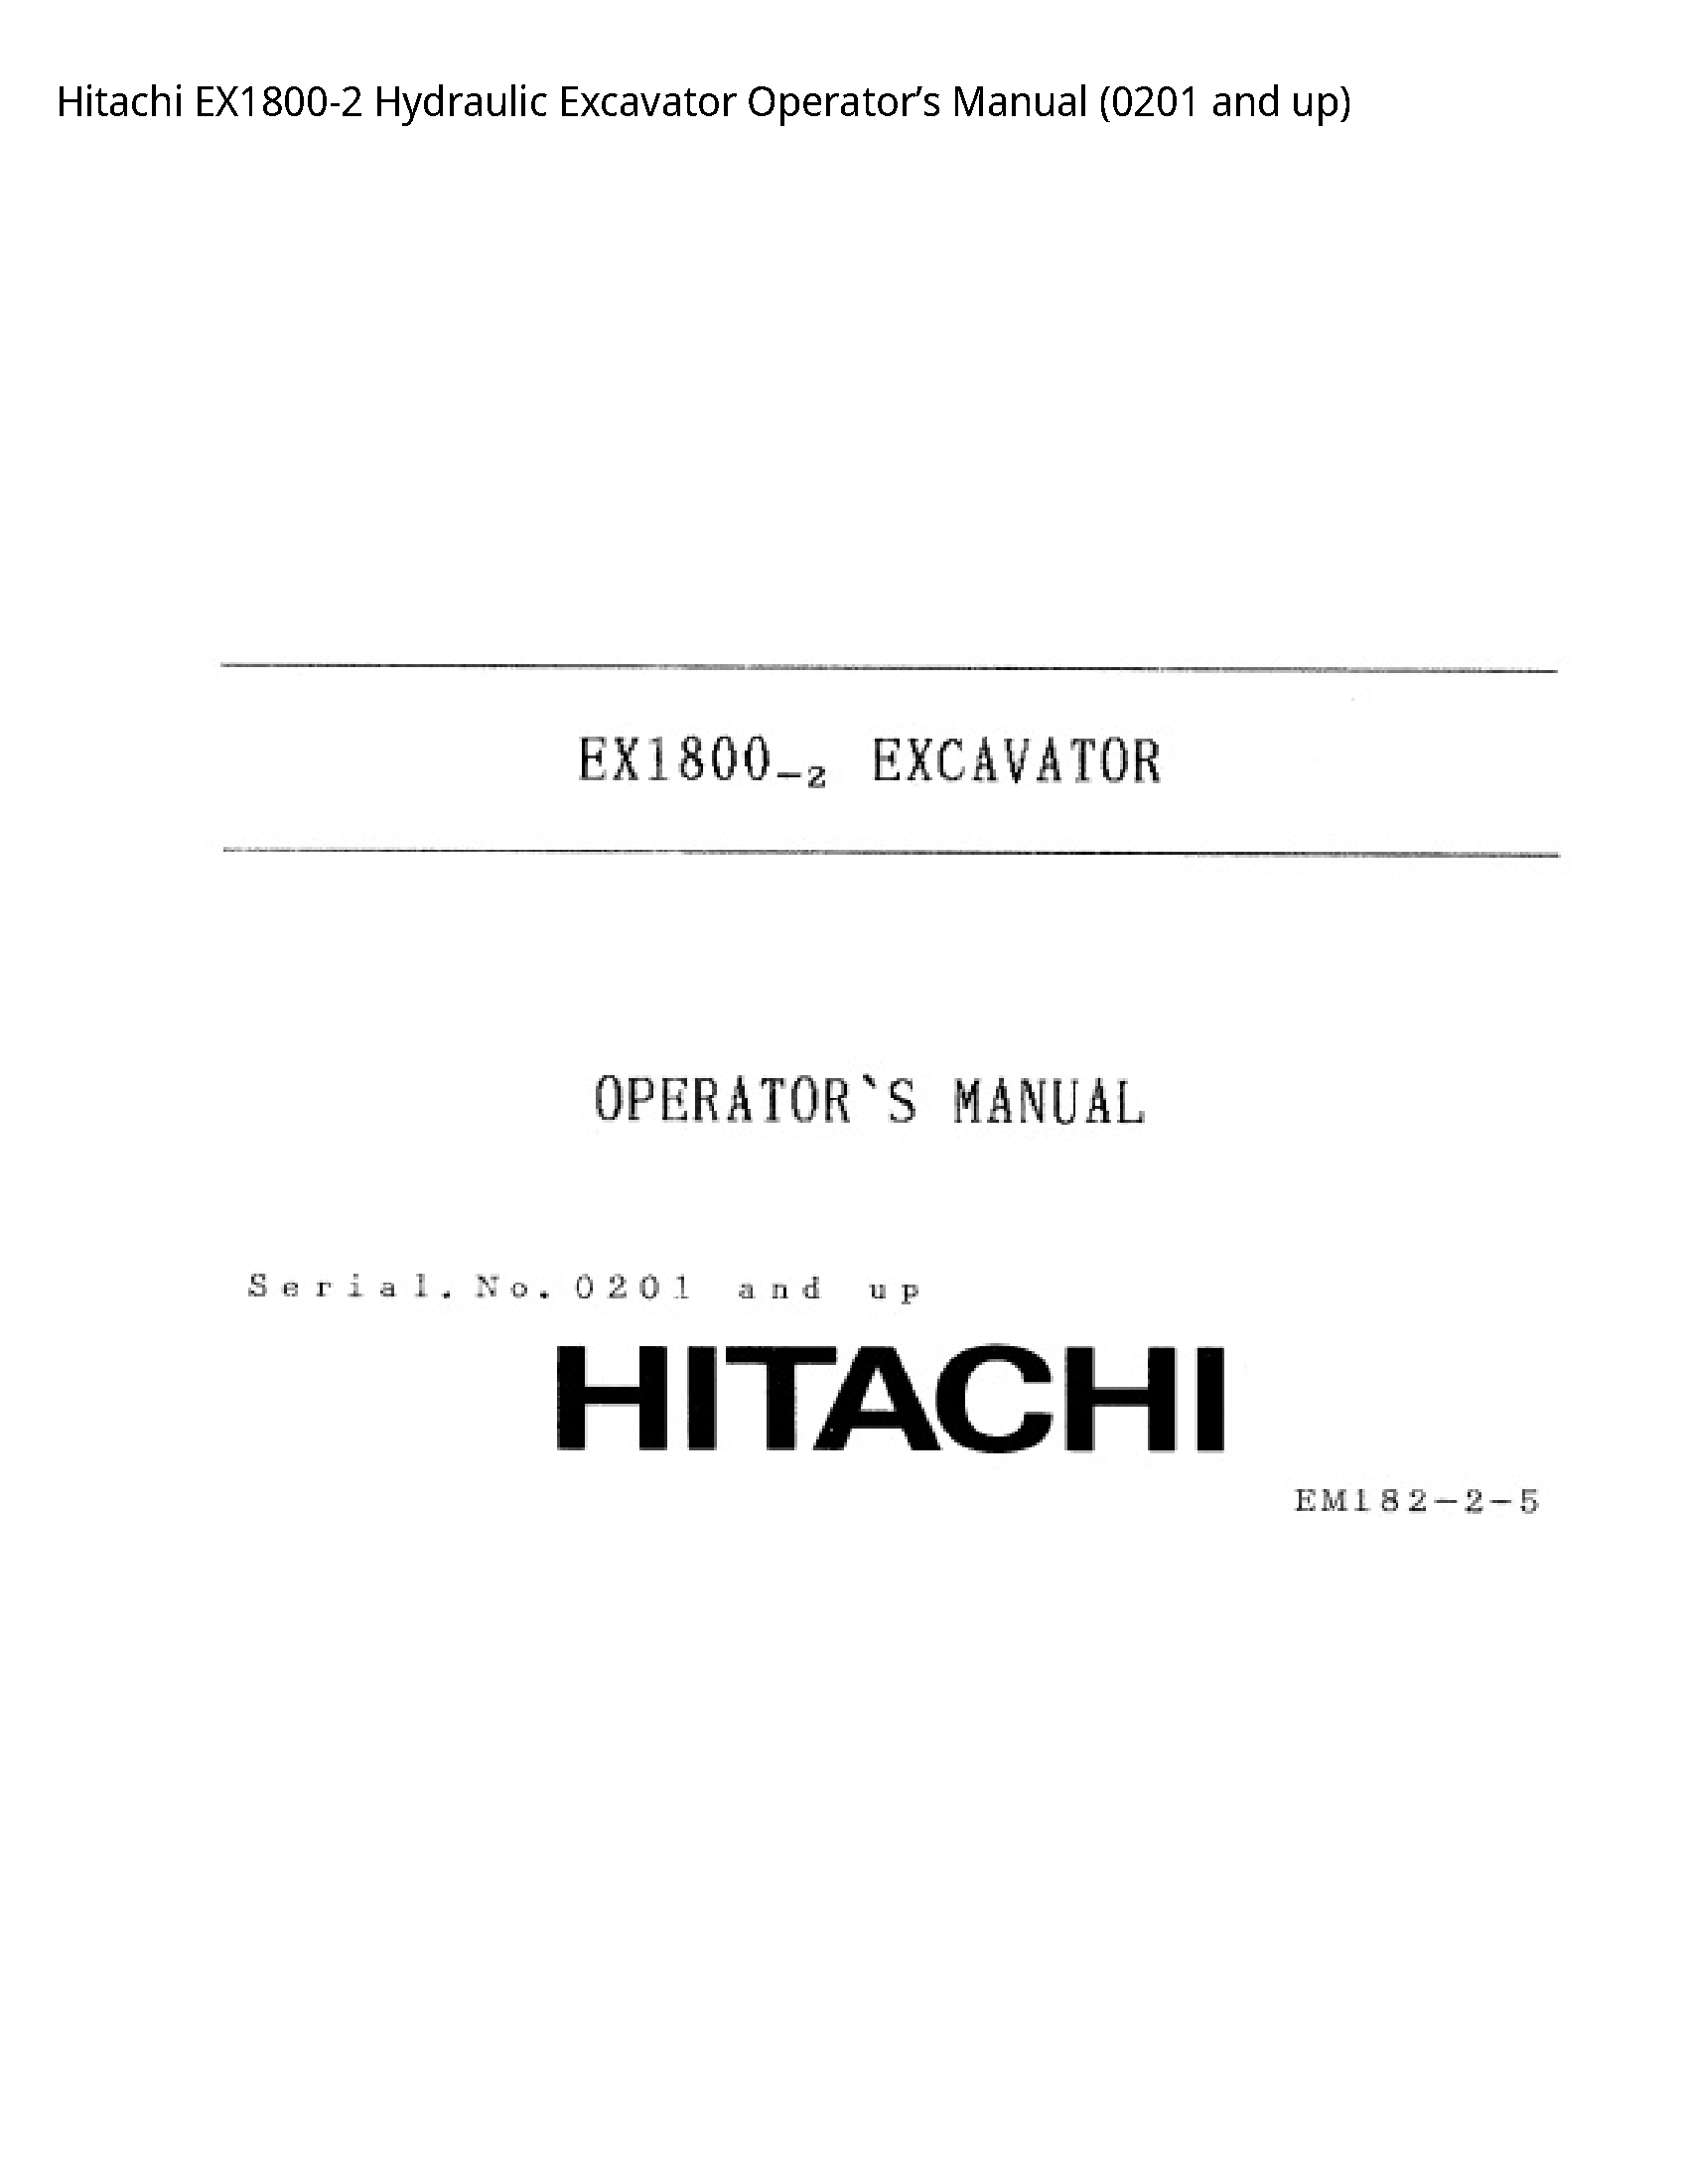 Hitachi EX1800-2 Hydraulic Excavator Operator’s manual